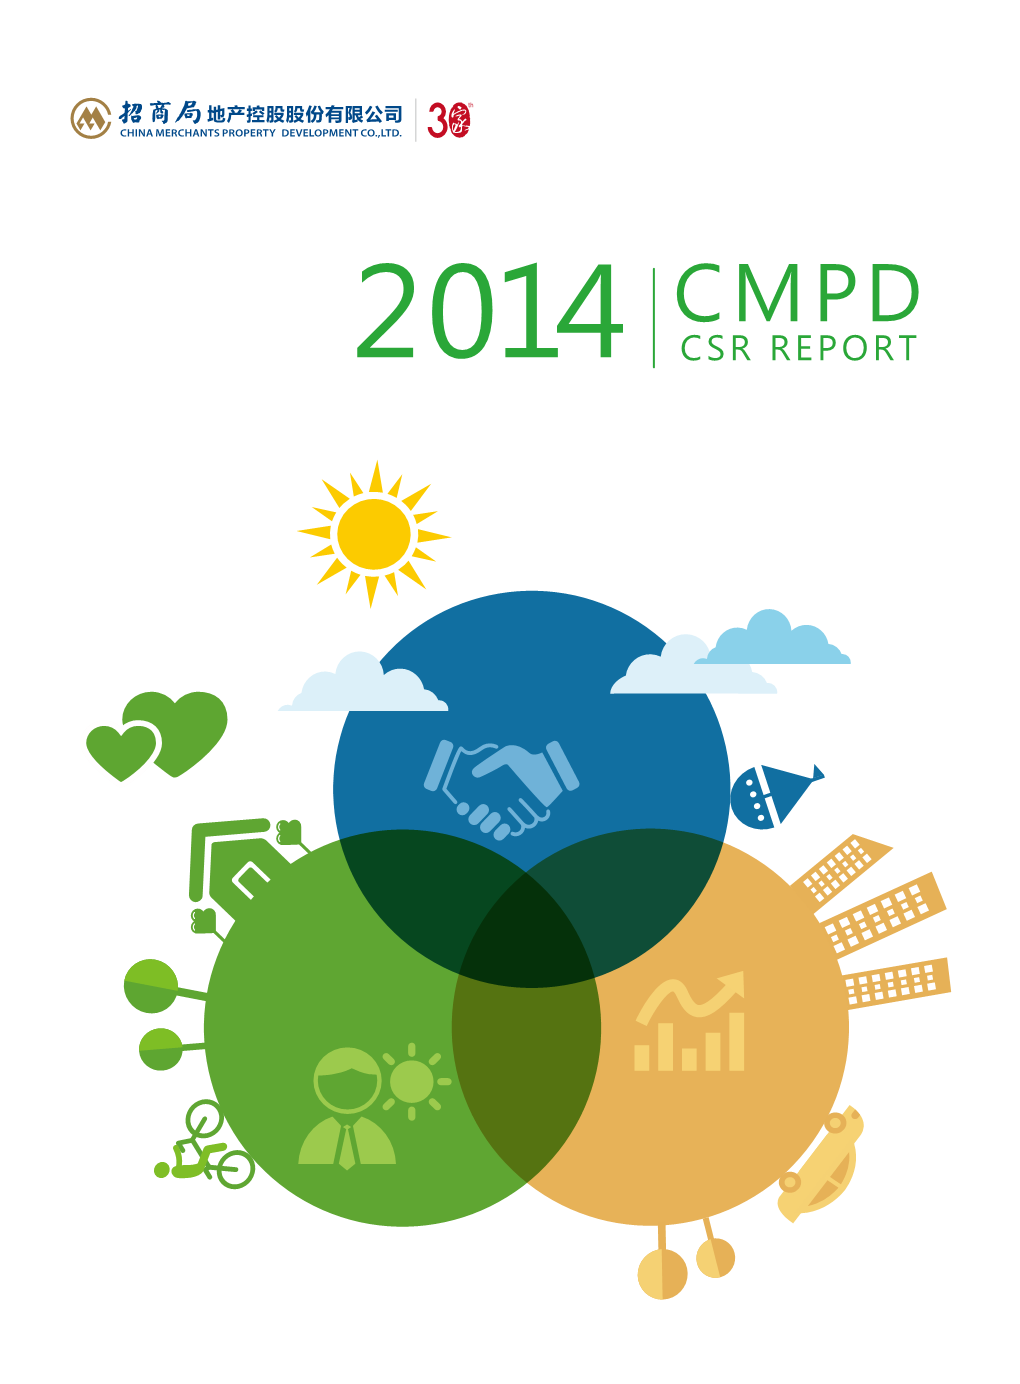 CSR REPORT to Promote Social Progress